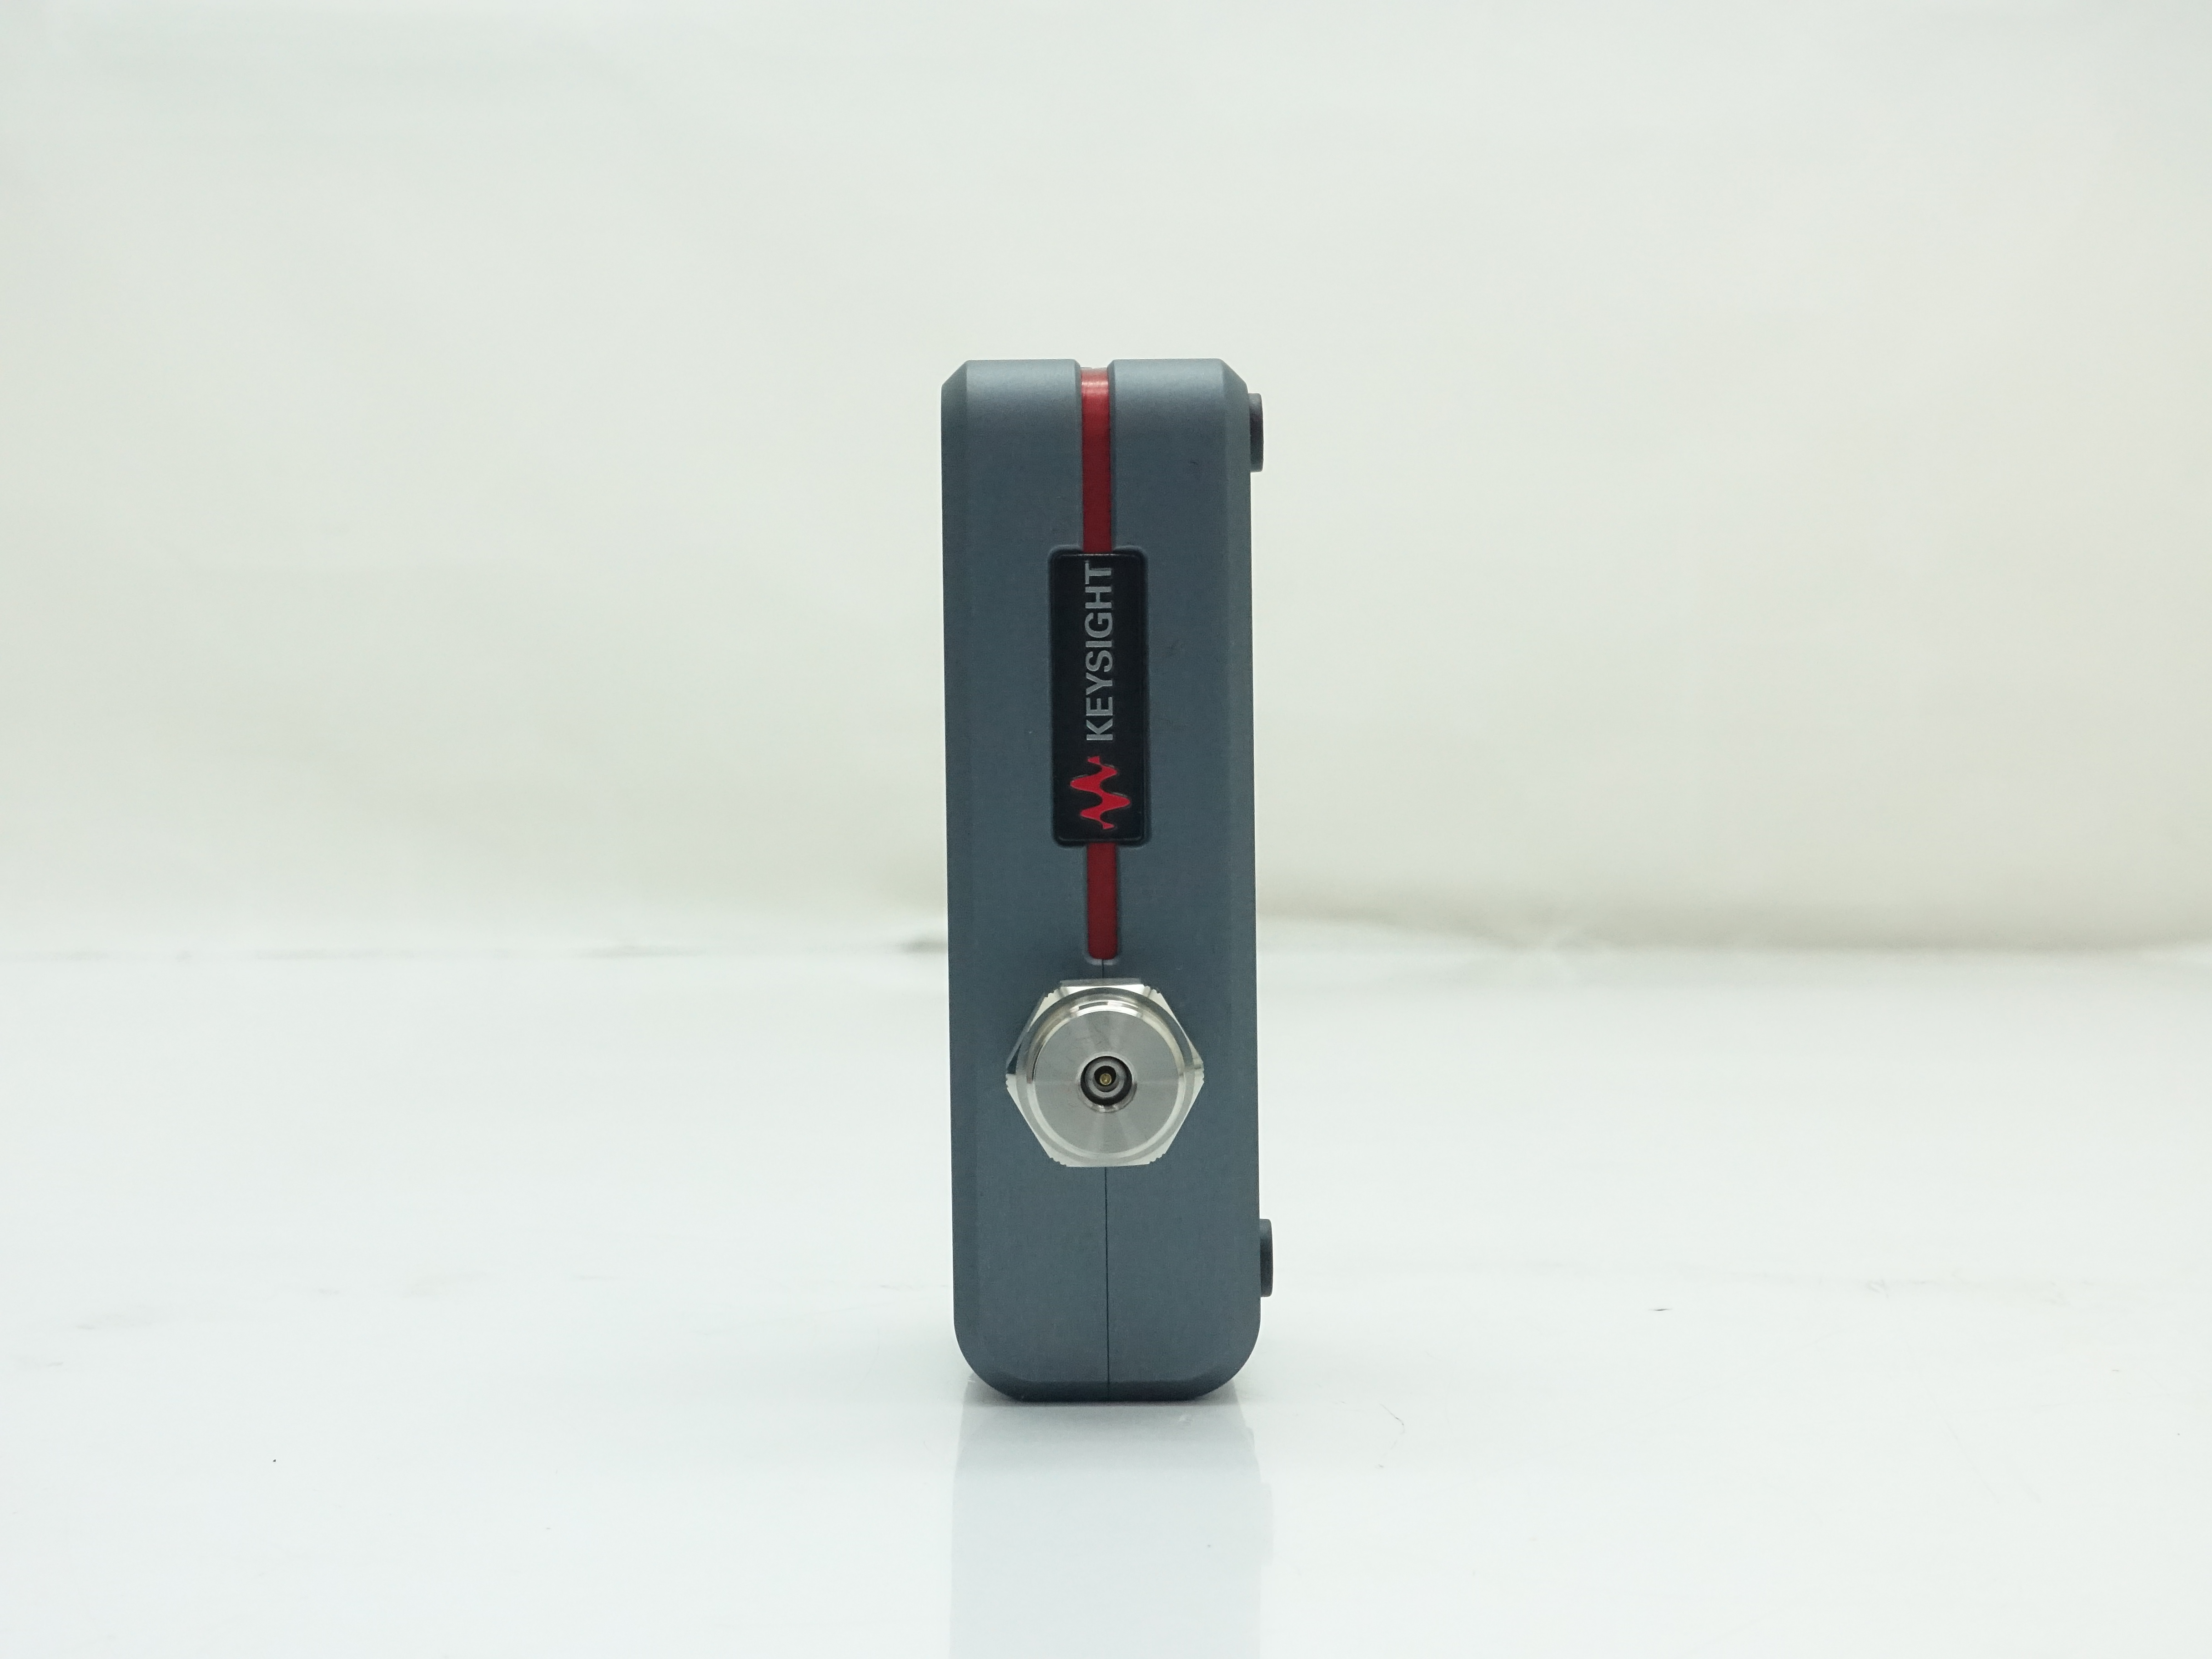 Keysight N4692D Electronic Calibration Module (ECal) / 2-port / 2.92 mm